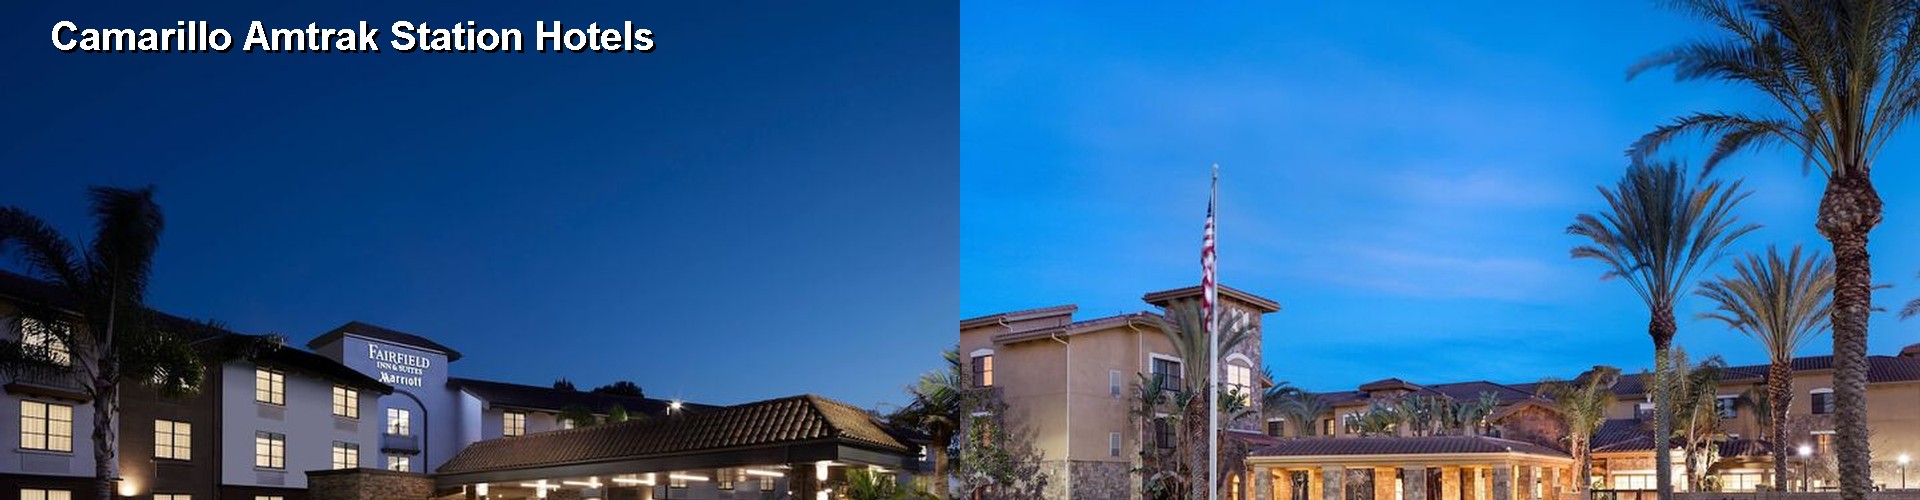 5 Best Hotels near Camarillo Amtrak Station